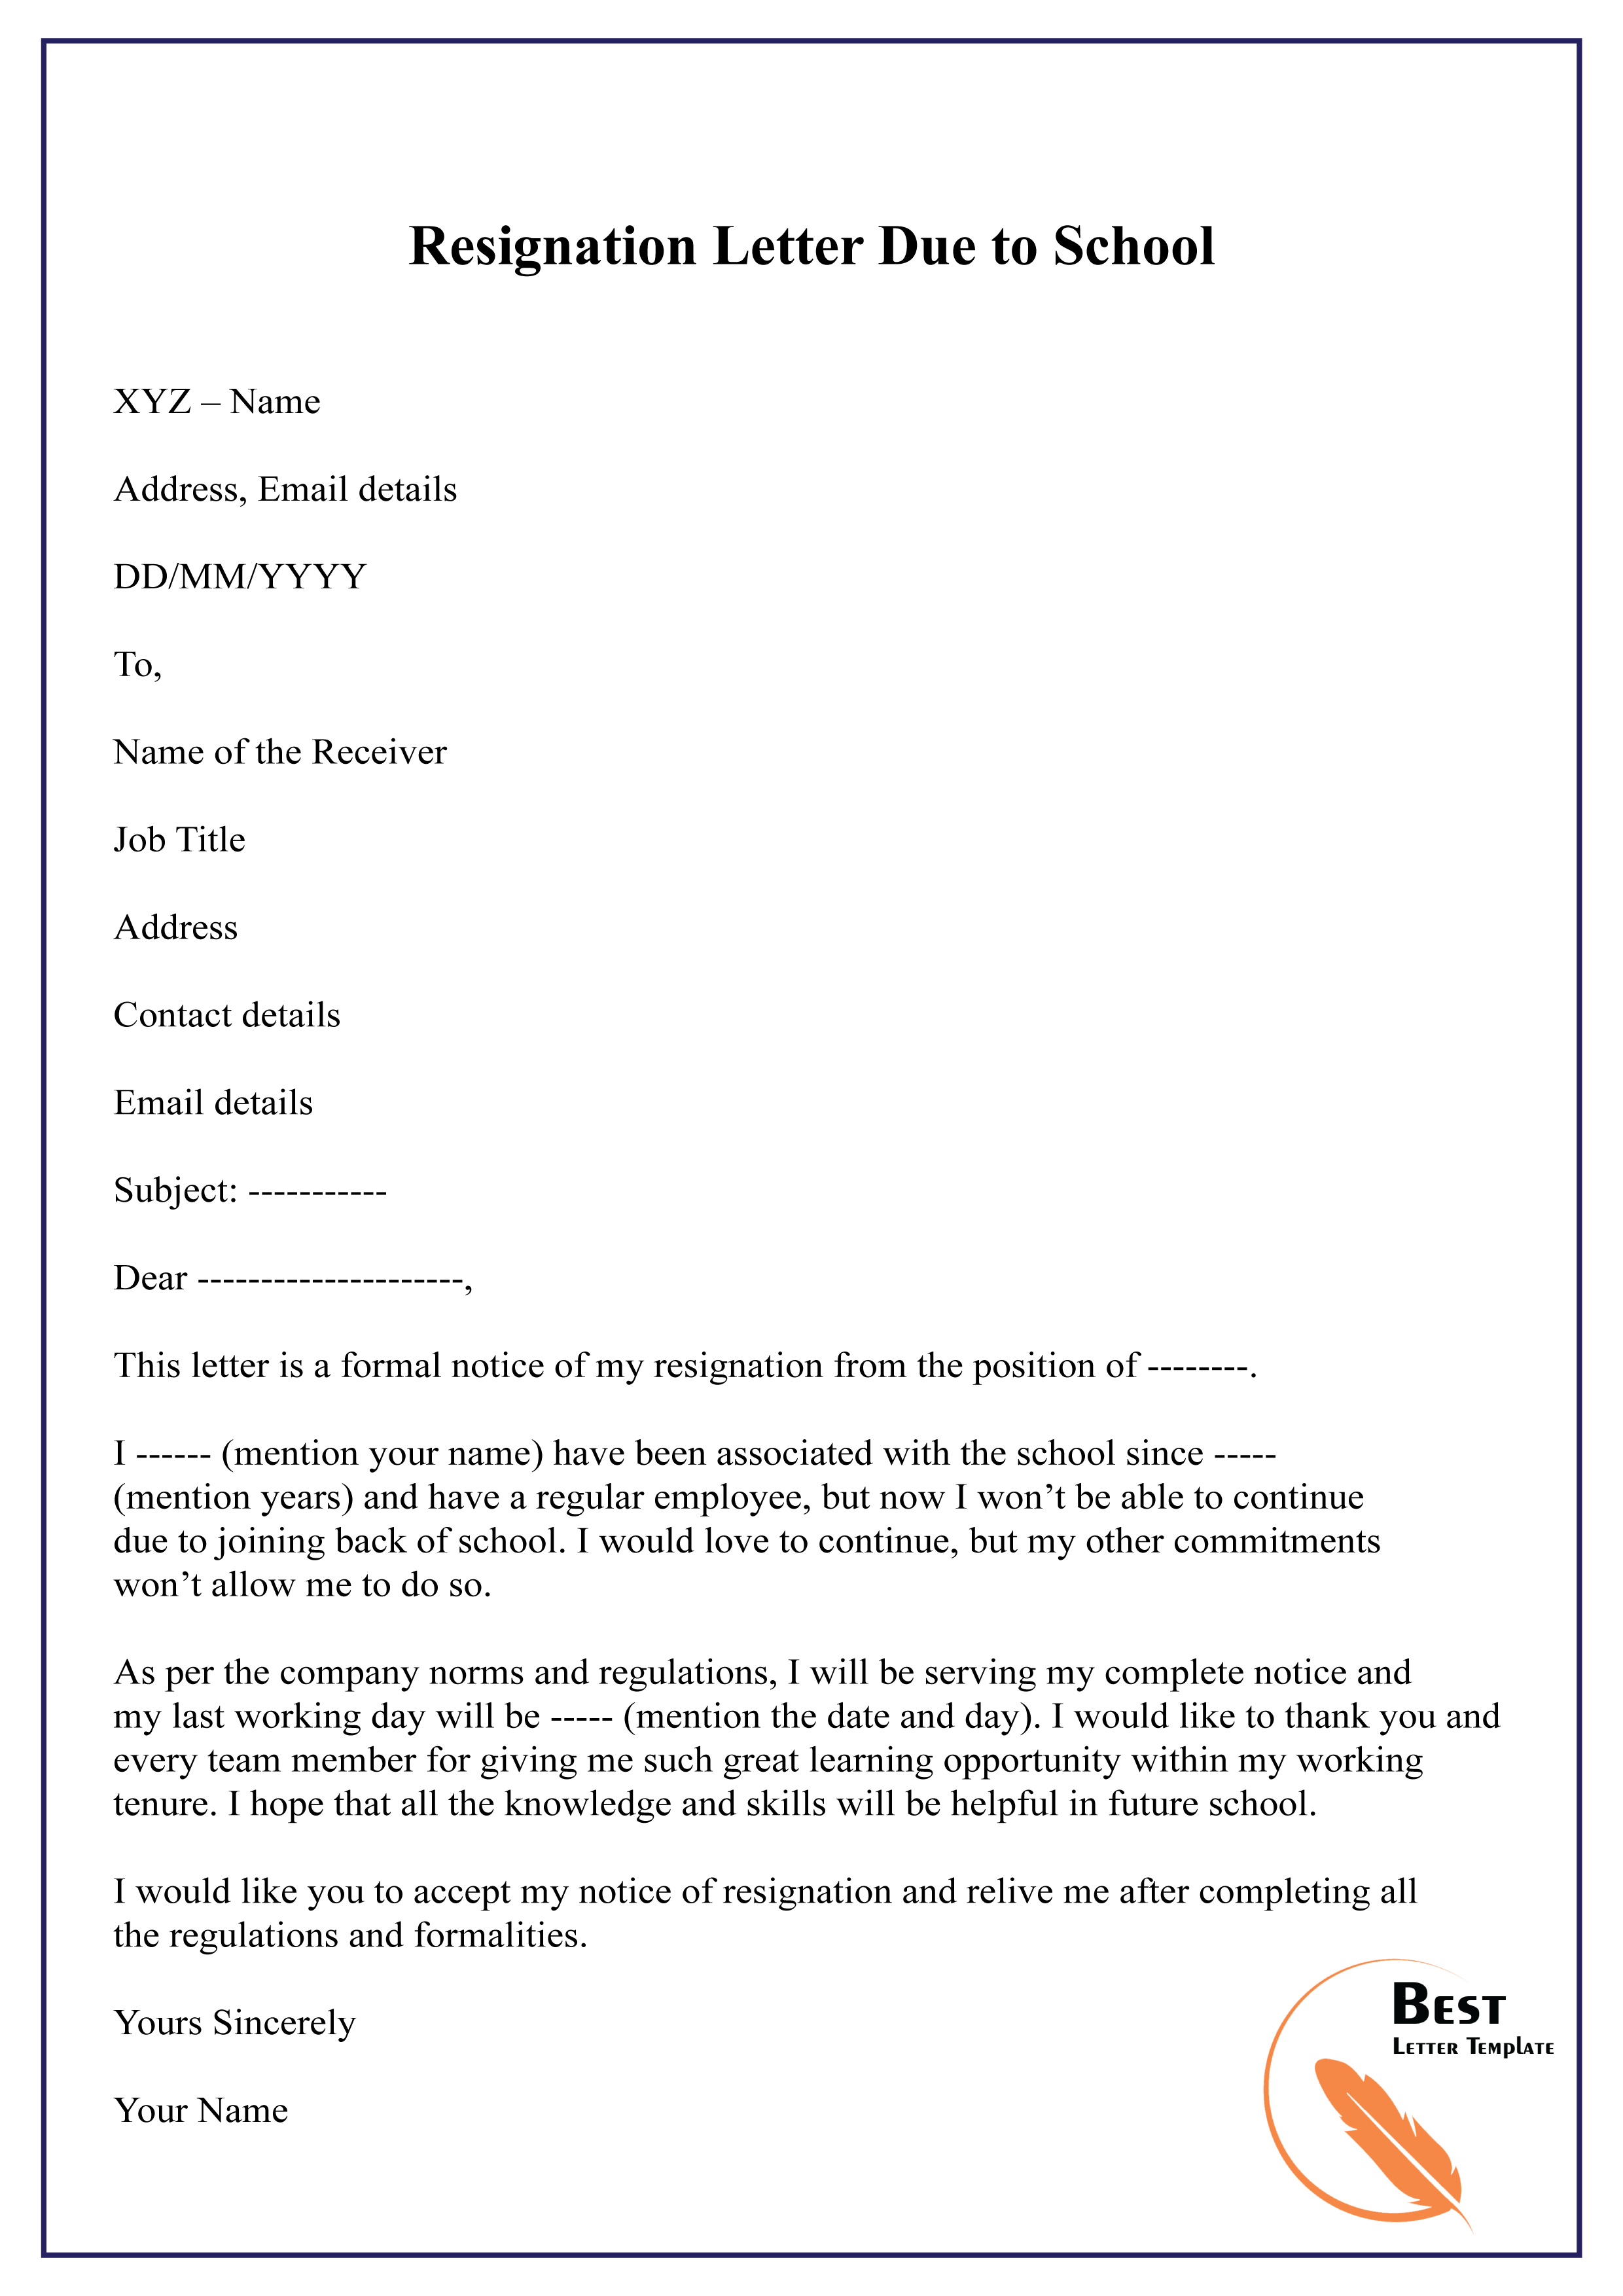 Resignation Letter Format In School Sample Resignation